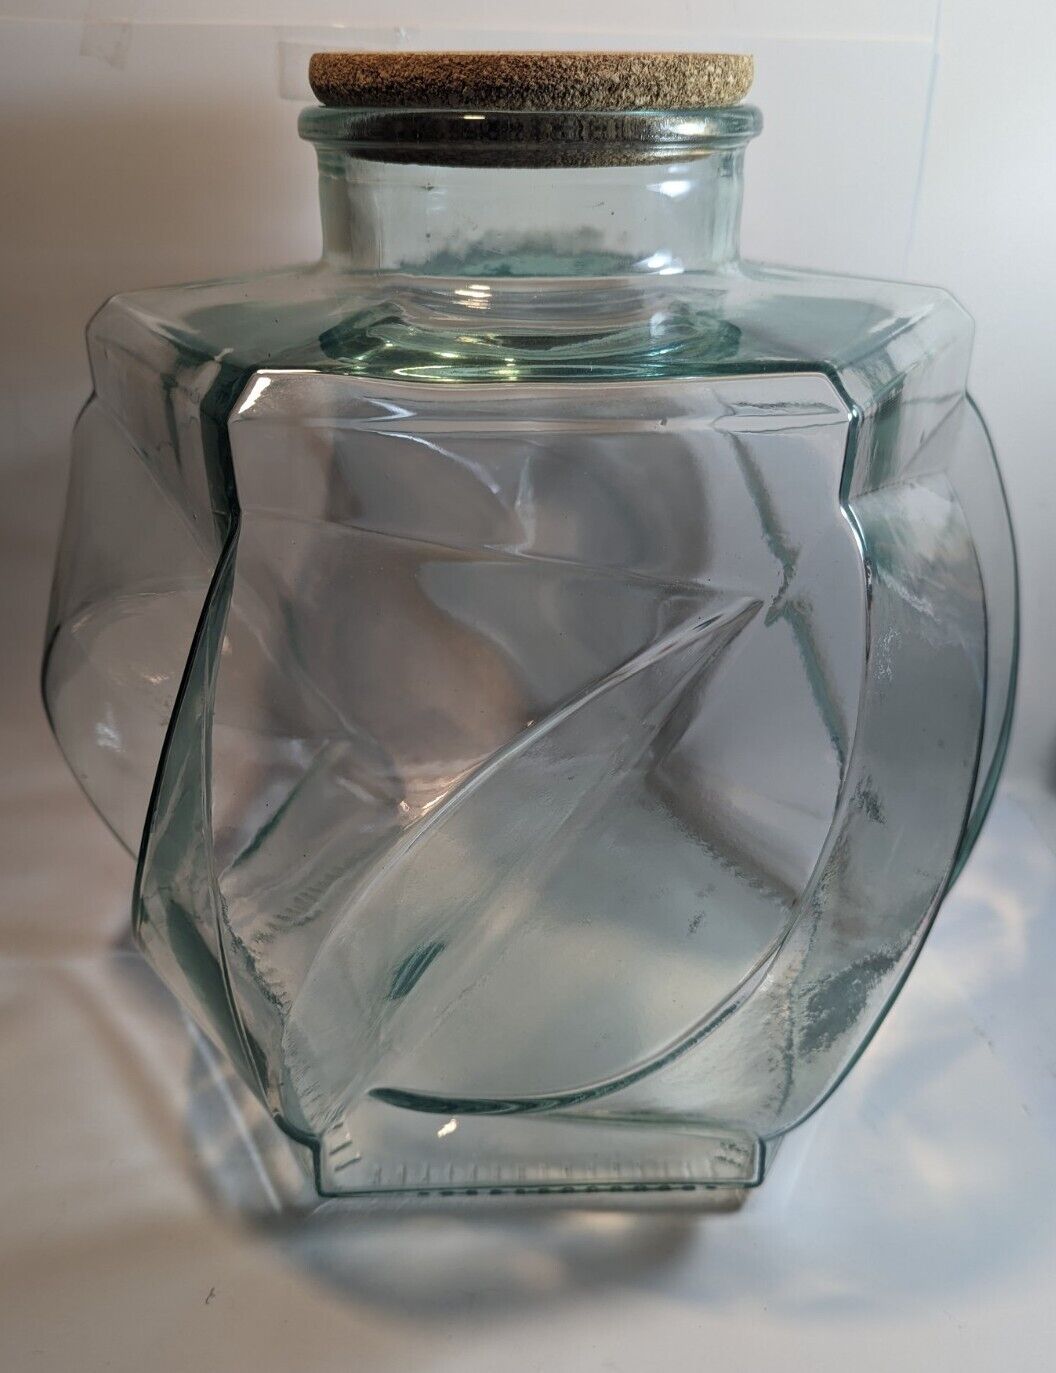 MASSIVE Geometric Glass Apothecary Jar Sole Di Toscana, Italy 524 Oz